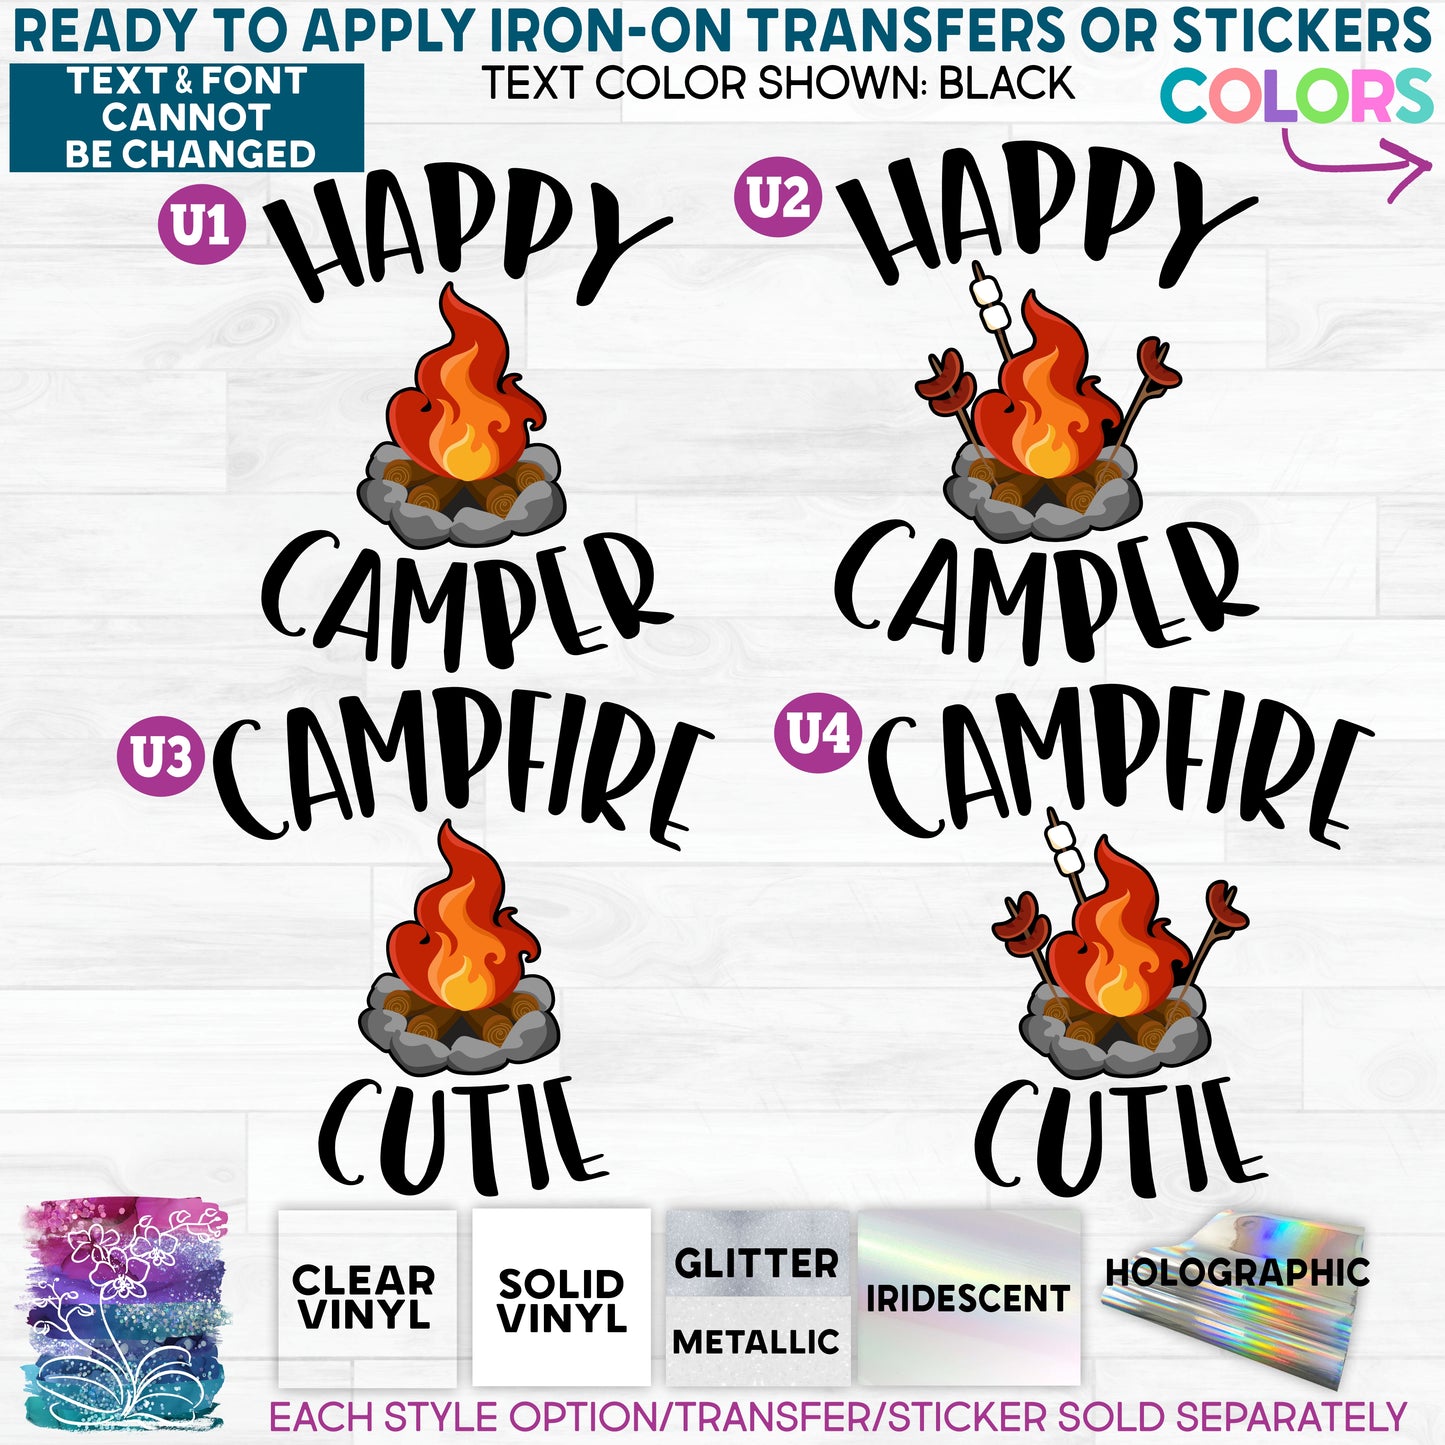 (s228-6U) Happy Camper Campfire Cutie Full Color Print Campfire Glitter or Vinyl Iron-On Transfer or Sticker